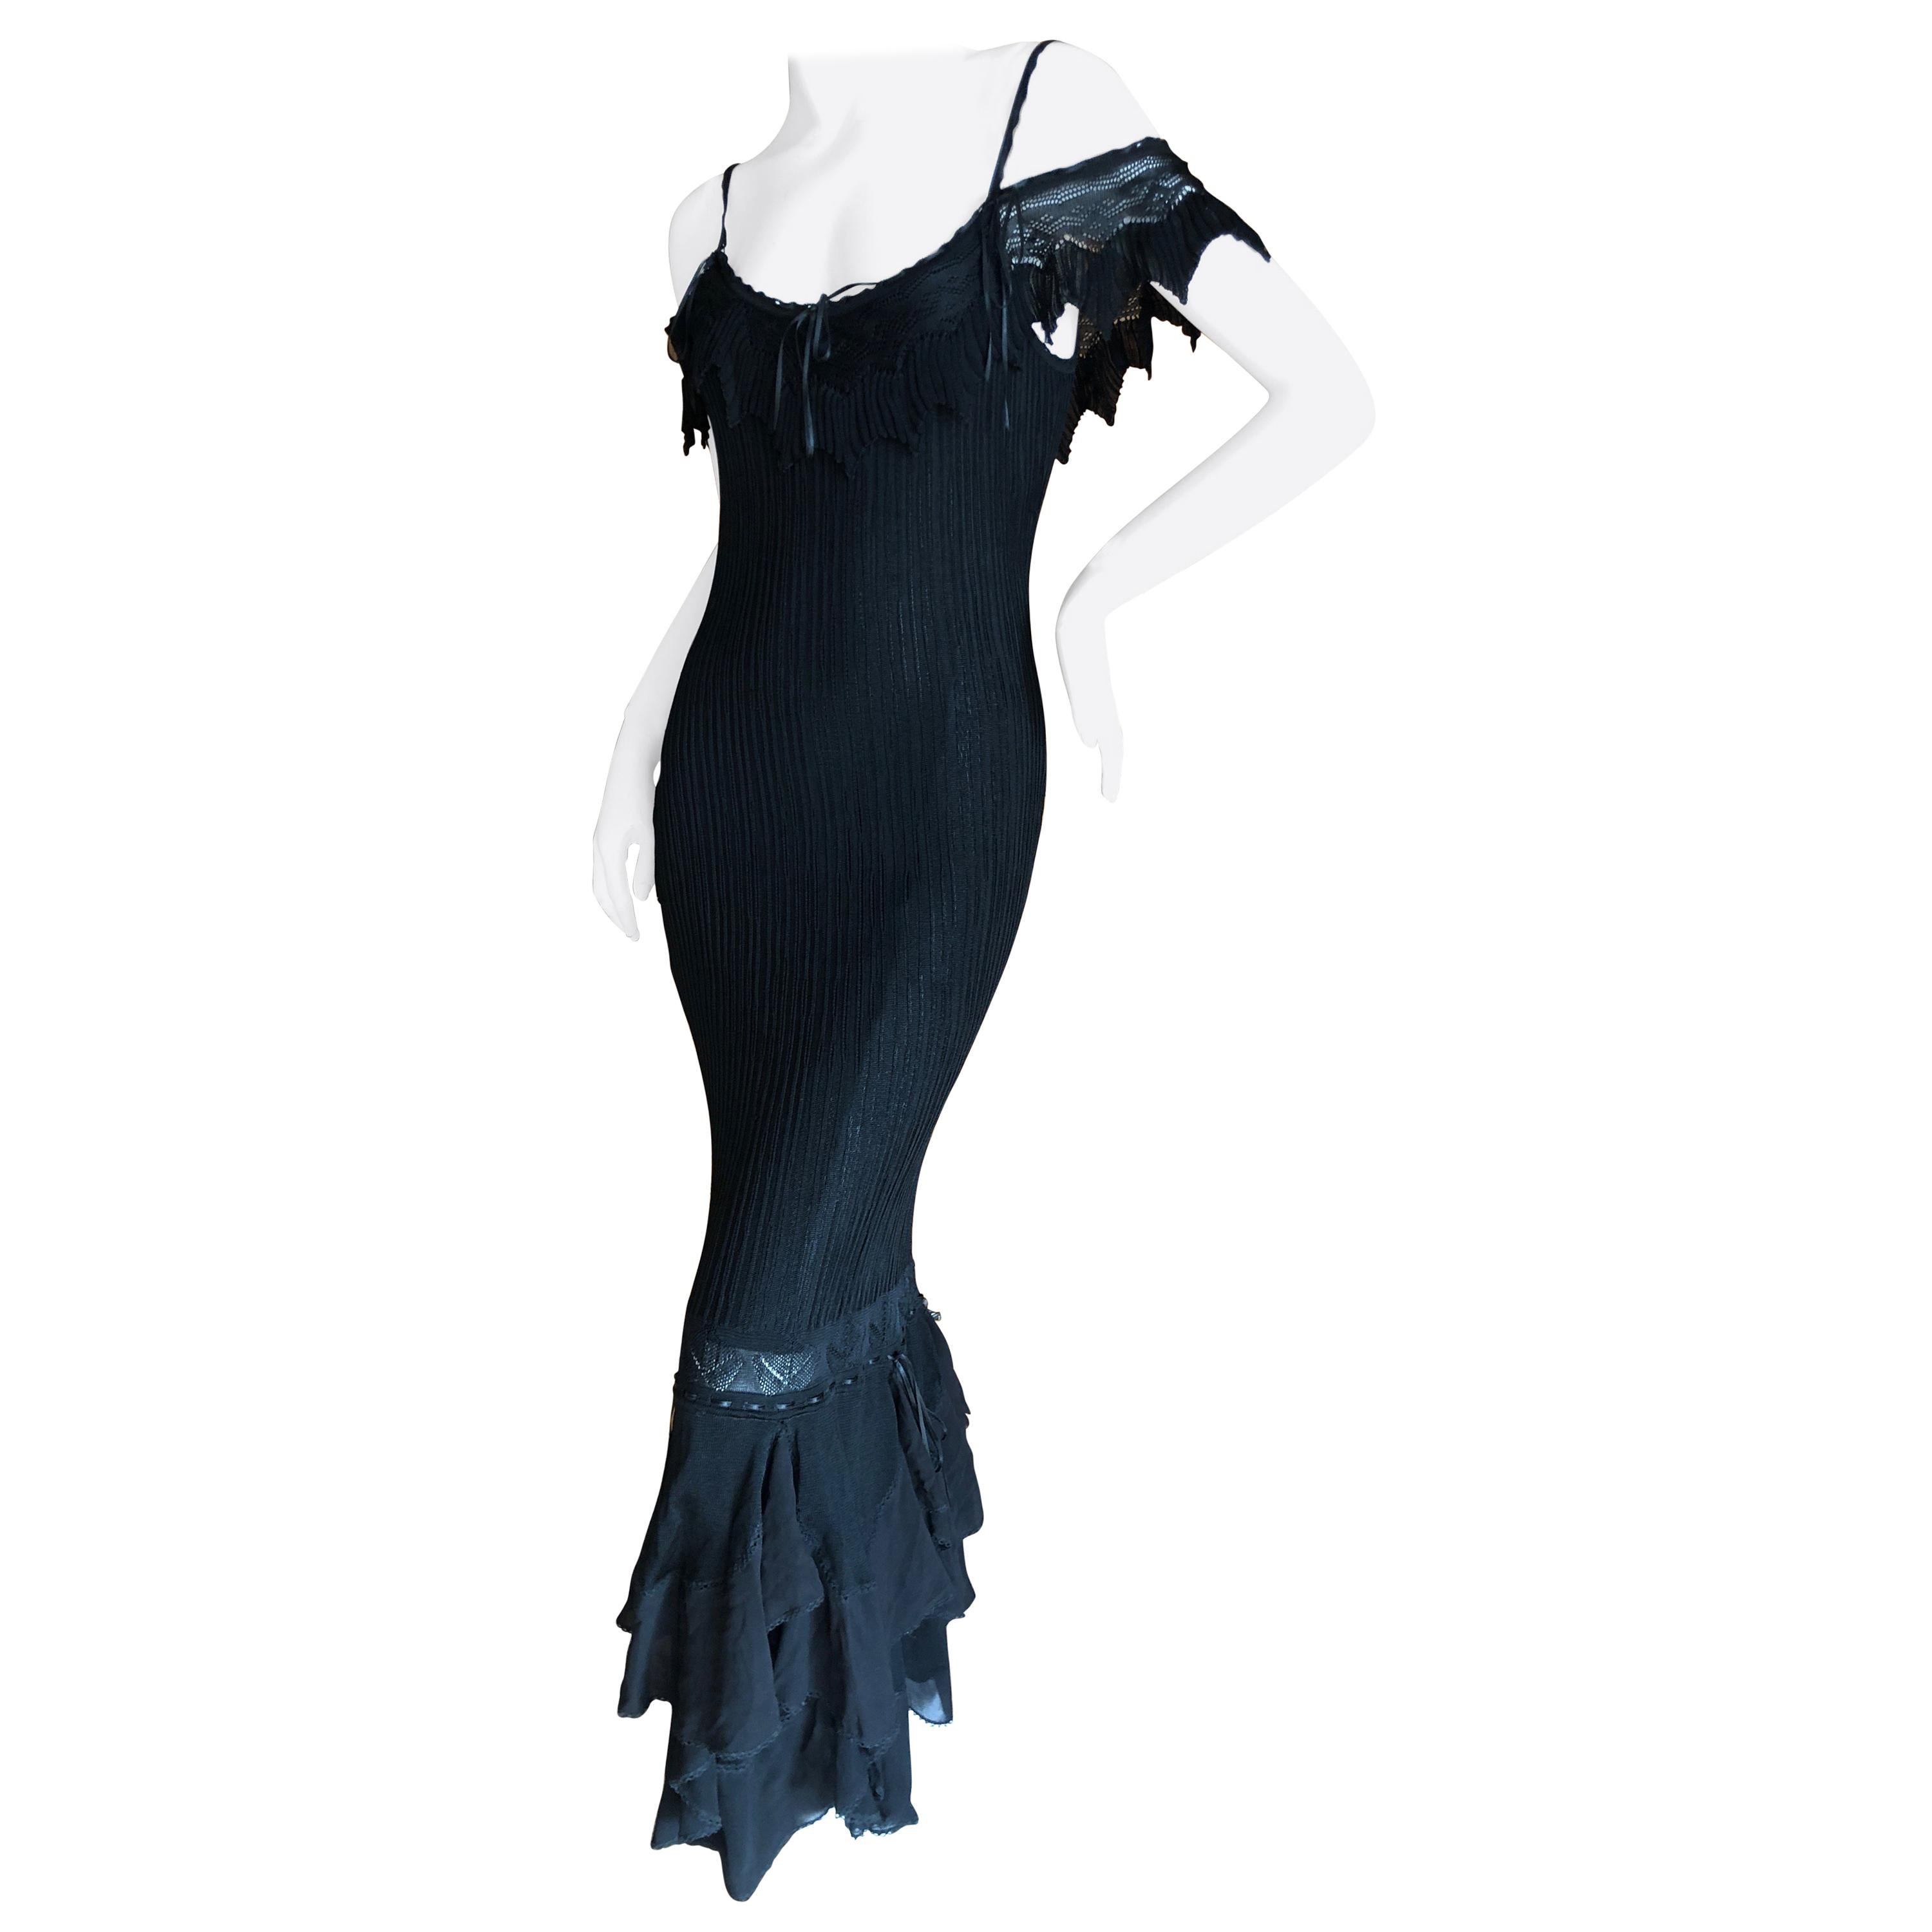  John Galliano Goth Black Semi Sheer Vintage  Ruffled Evening Dress For Sale